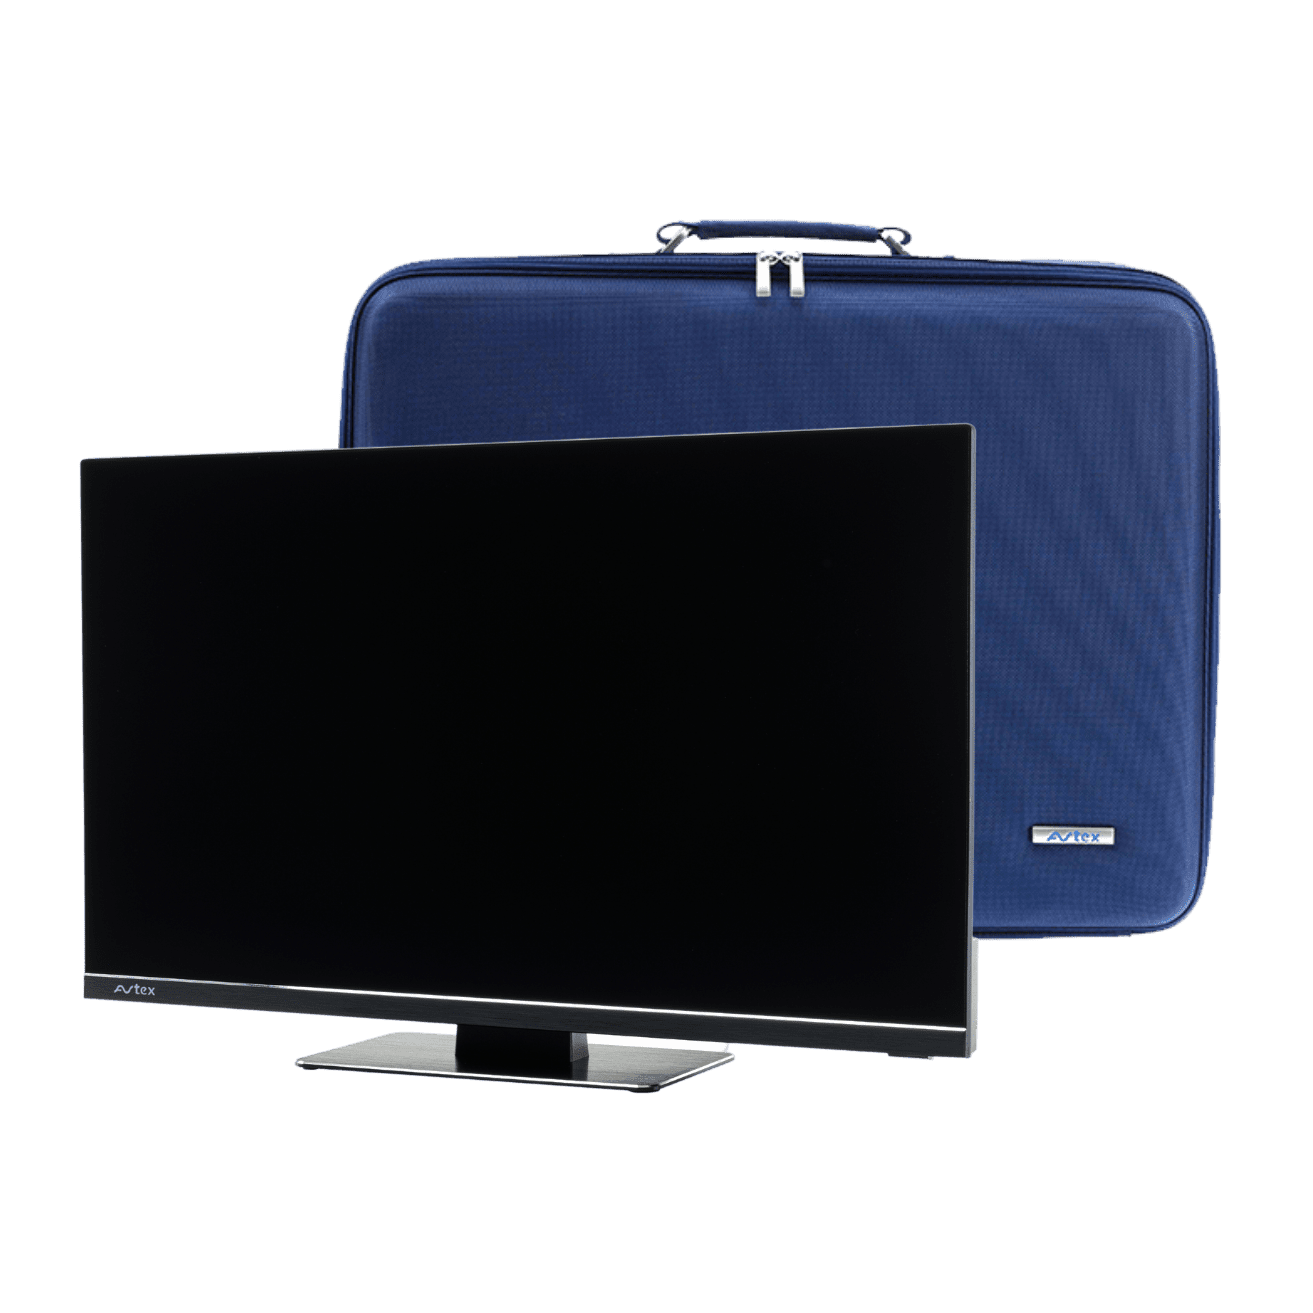 Avtex V249DS 24 inch Smart TV-DVD Combi Bundle